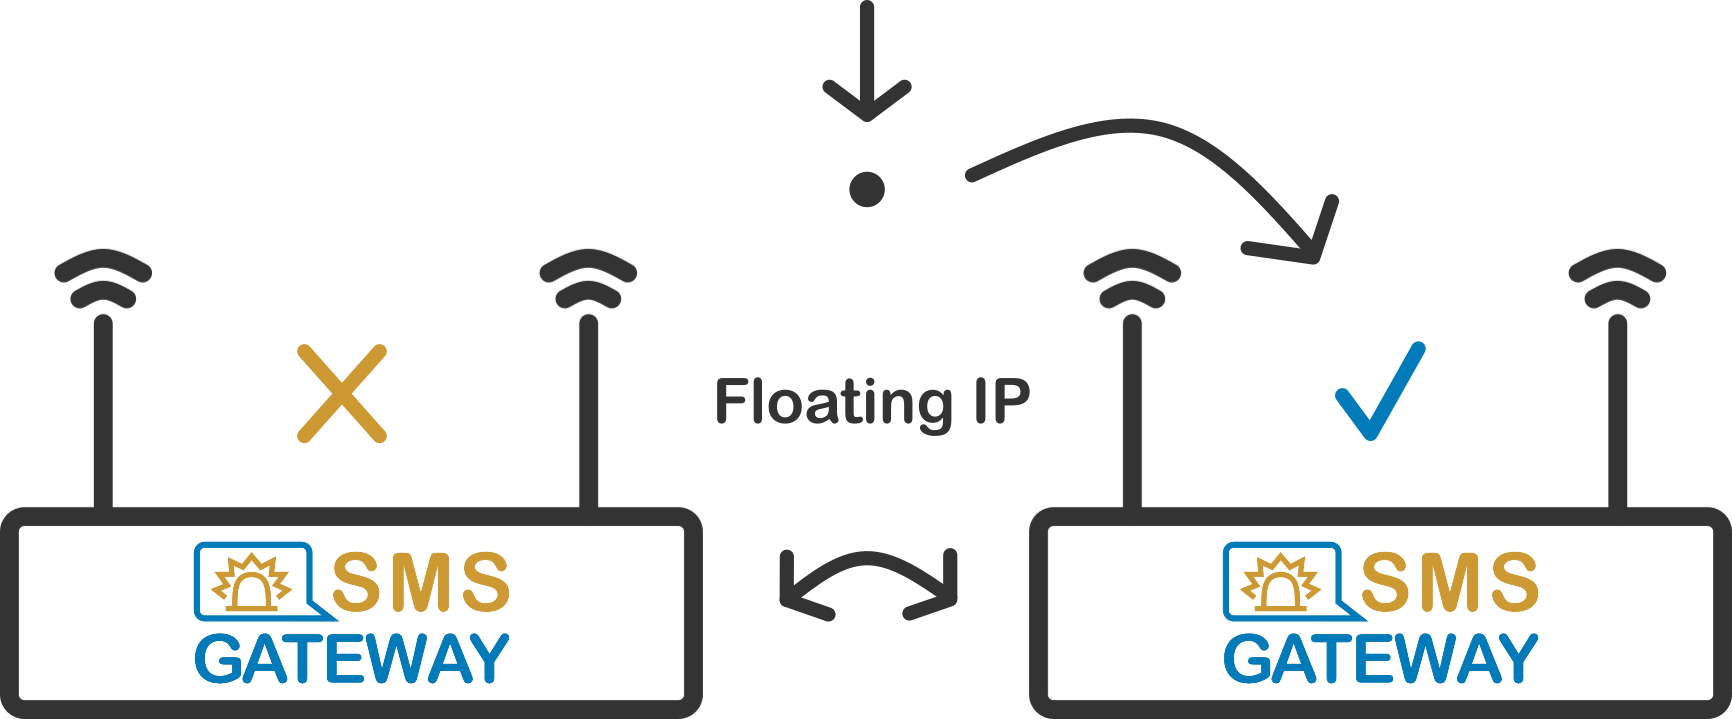 SMS Gateway Floating IP